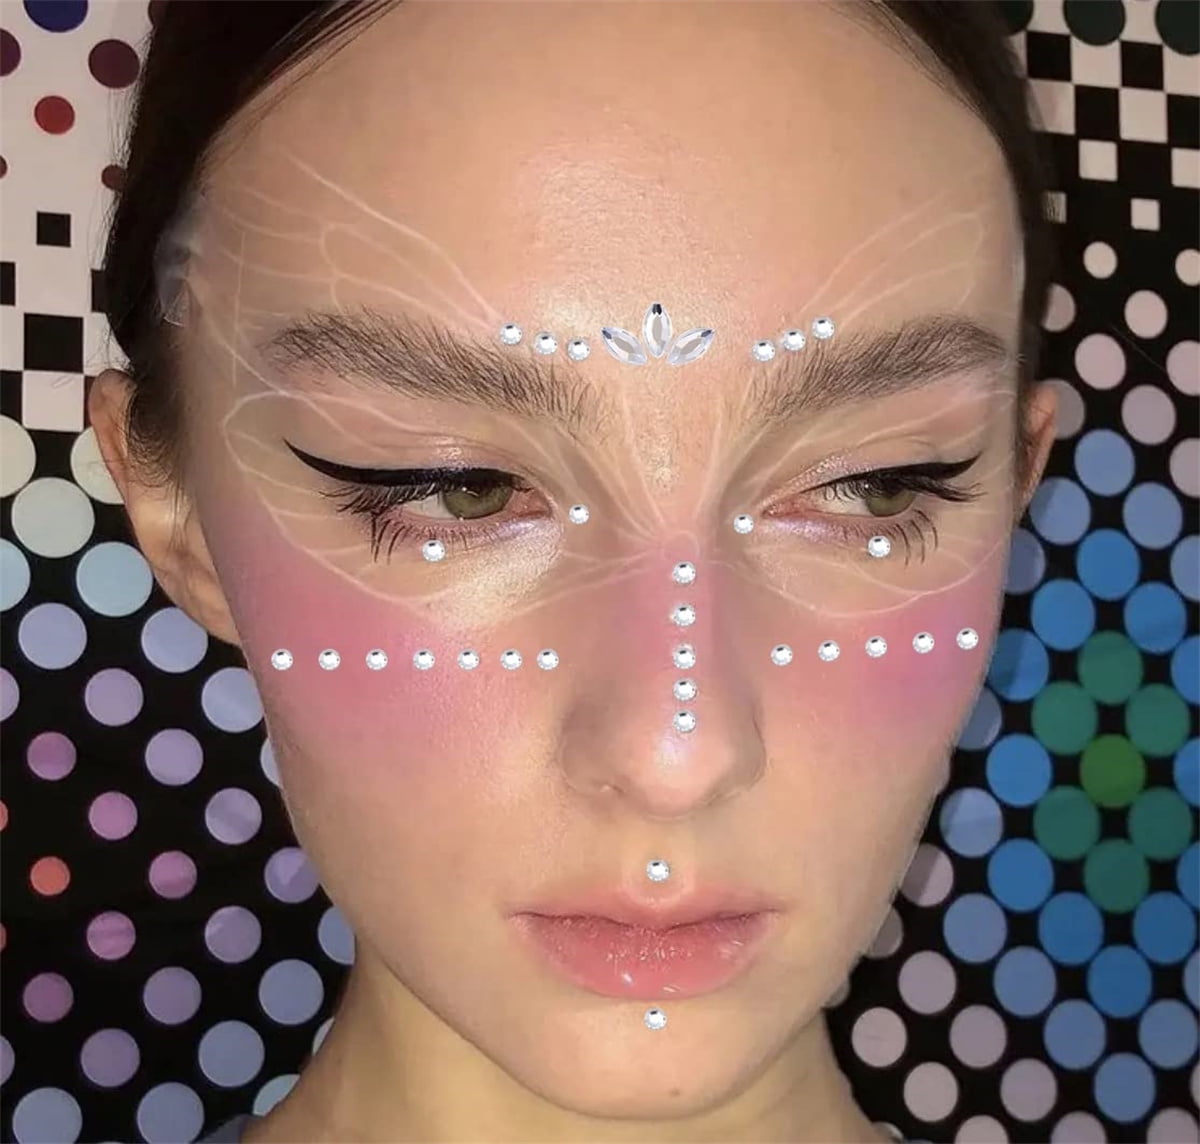 TTTattoodotcom Glastonbury Bindi Set - Face Gems Stick Bindi Dots Jewels Bindi Dots Bindis Beauty Body Art Accessories Festival Birthday Gift for Her